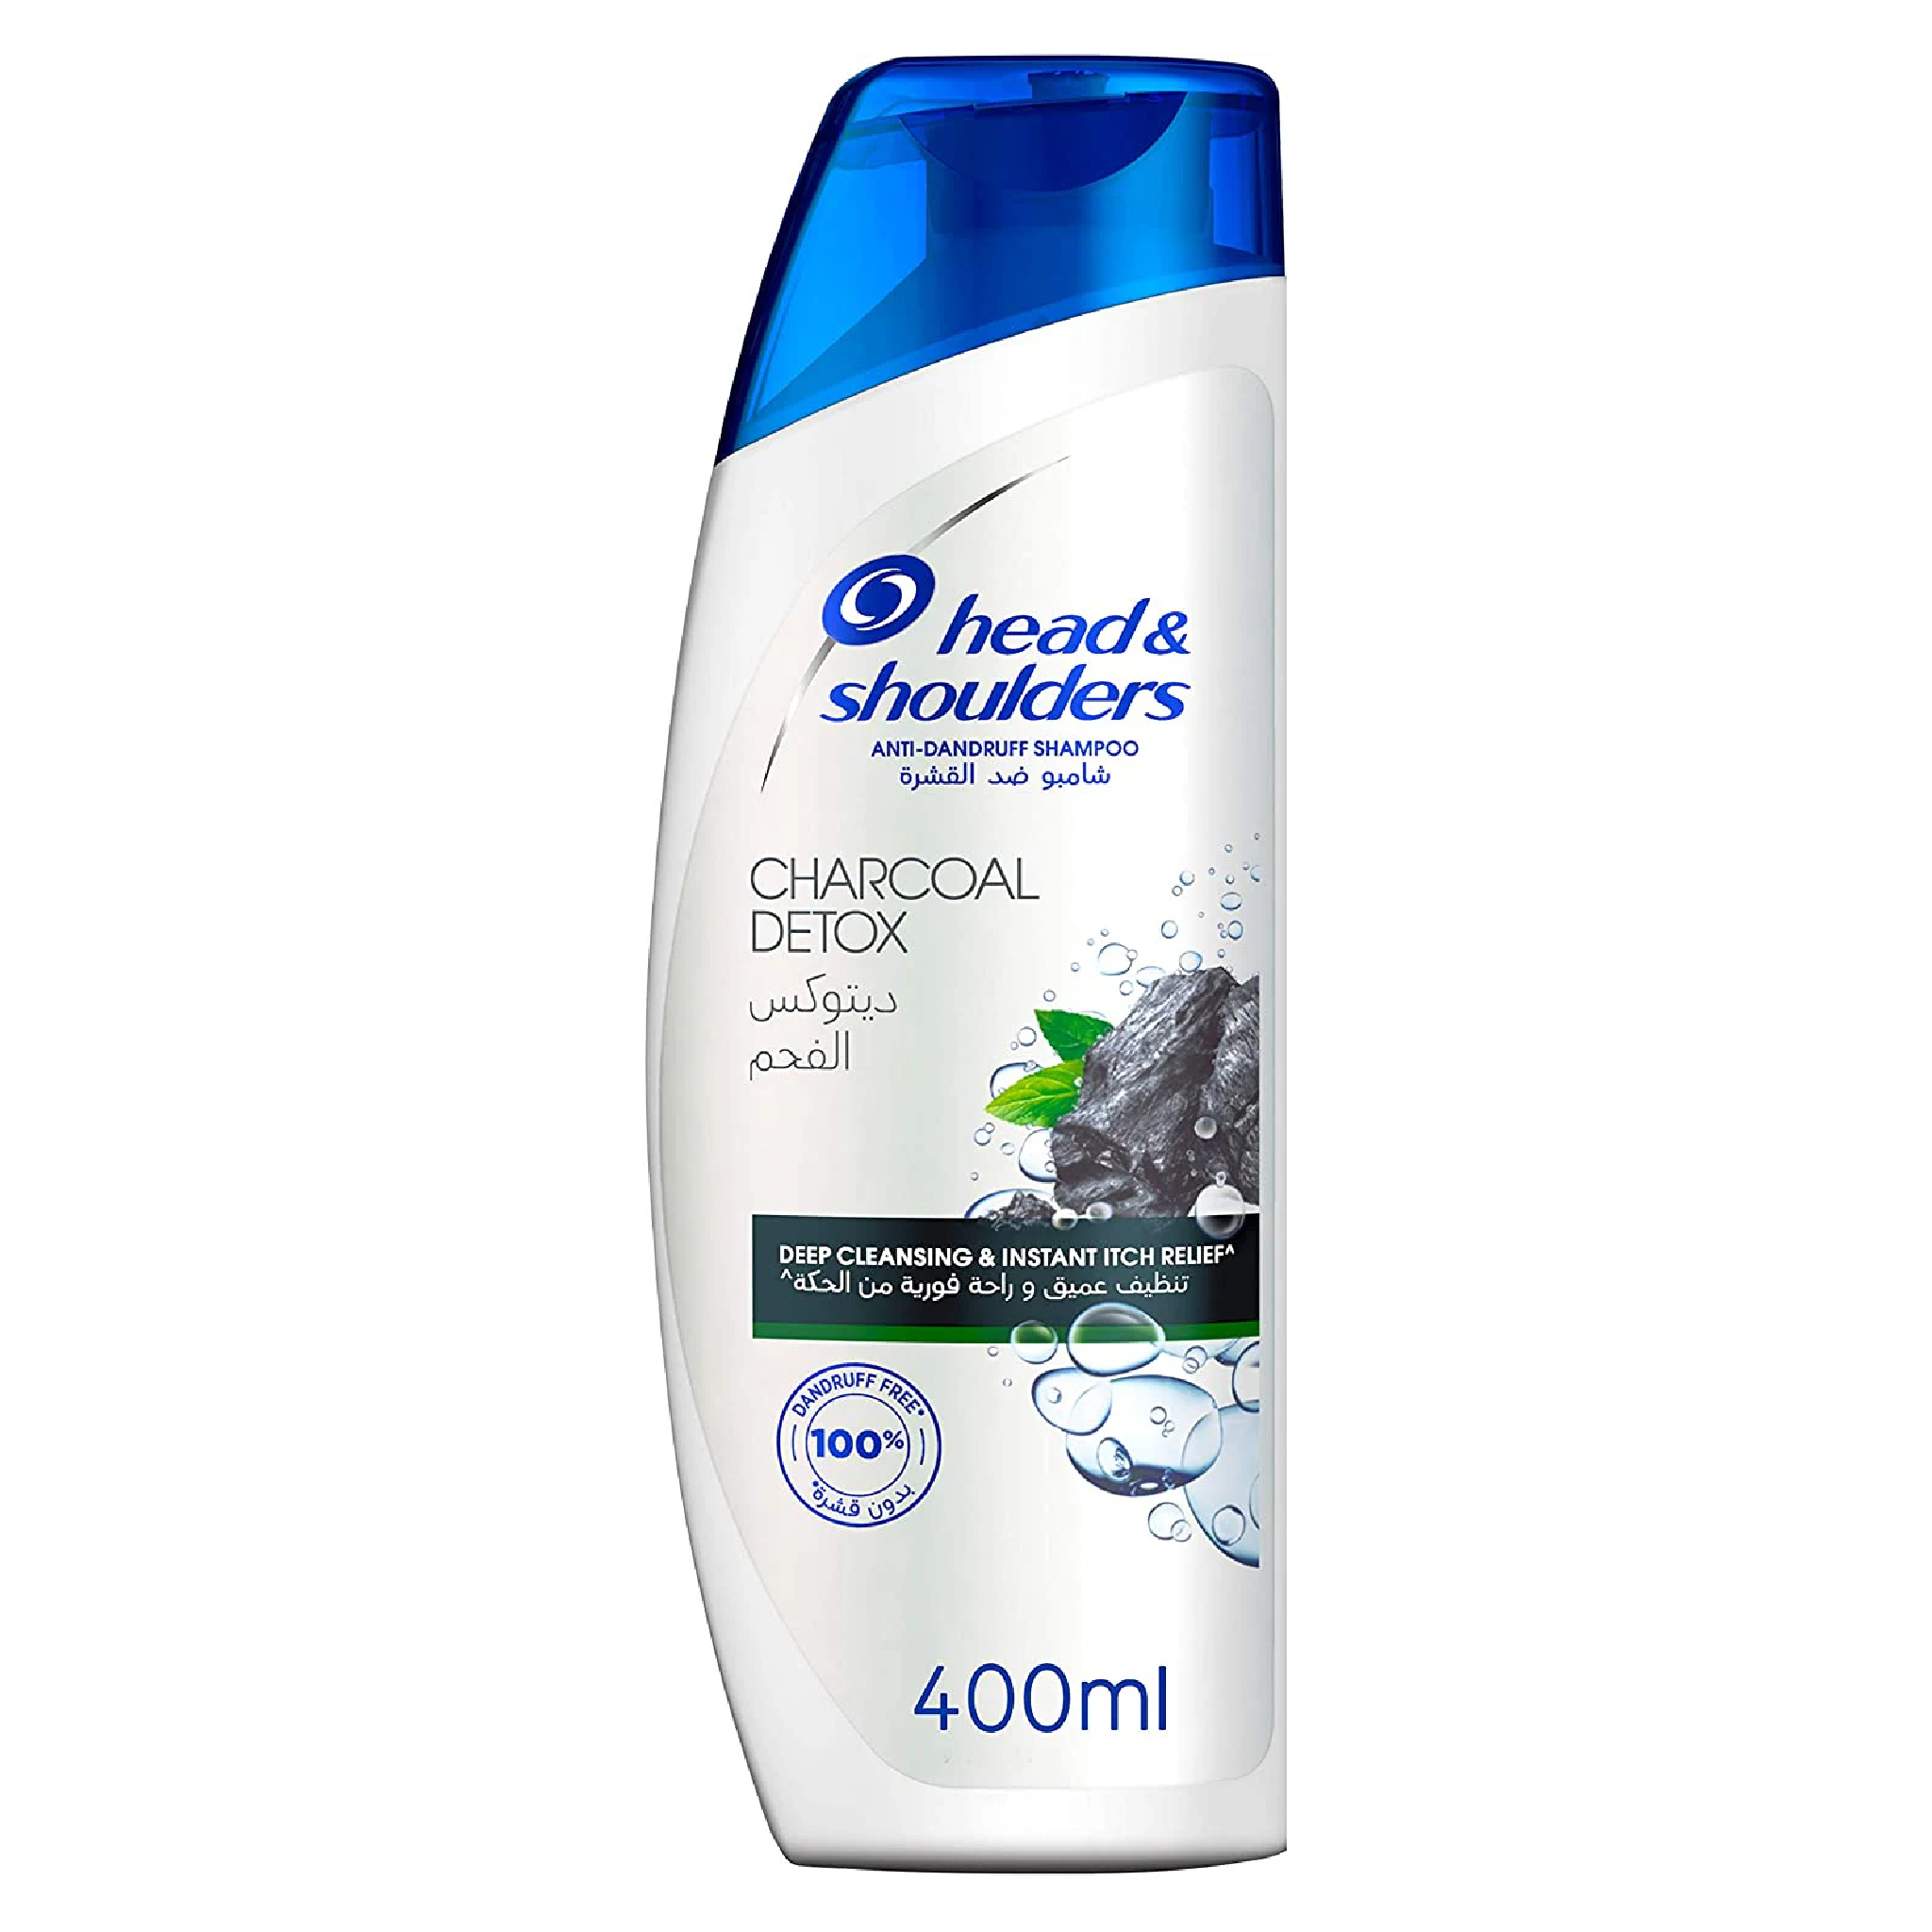 Heads & Shoulders Charcoal Detox Shampoo 400Ml